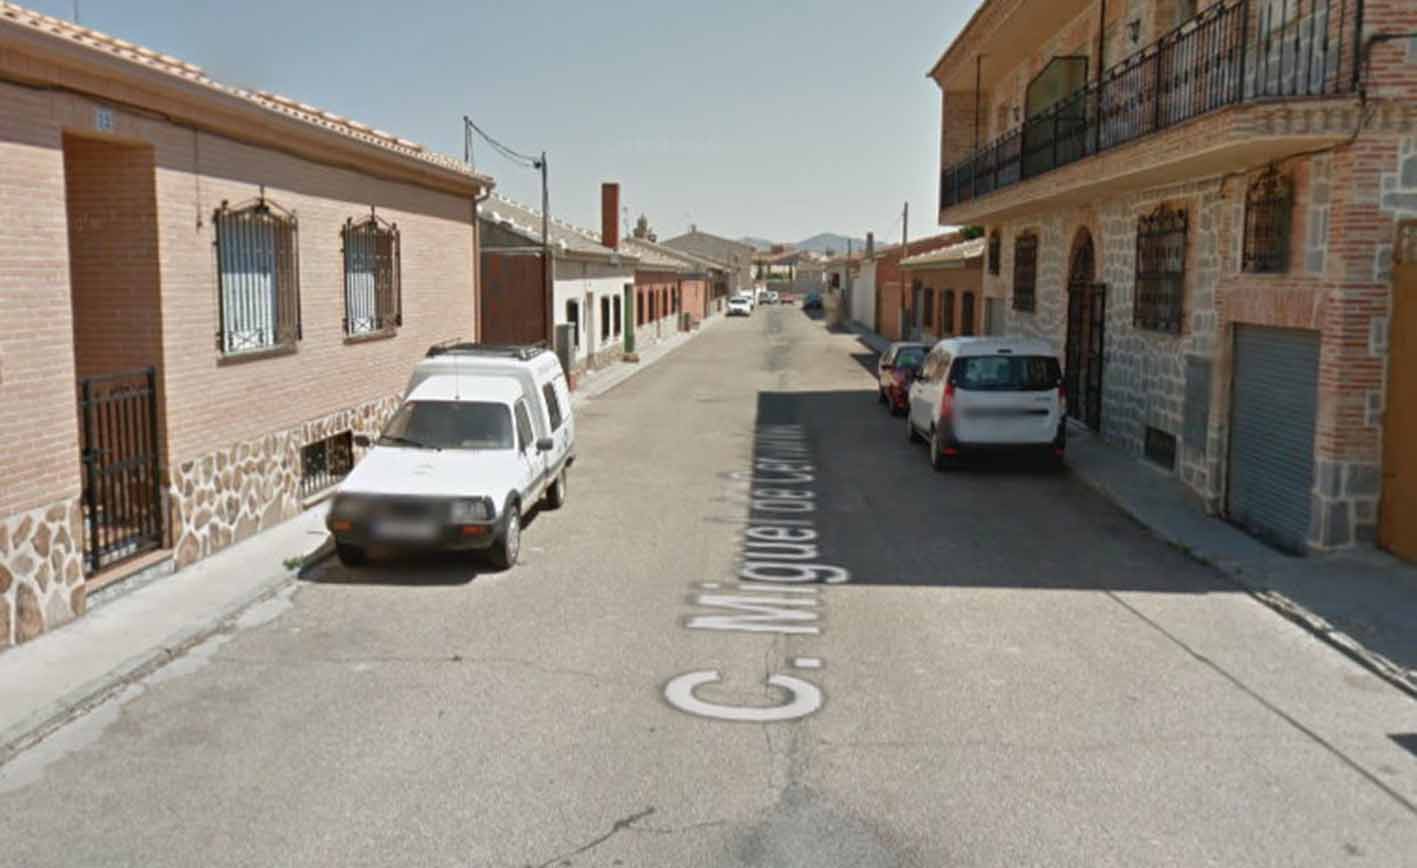 El crimen ocurrió en la calle Miguel de Cervantes de Gálvez. Foto: Google Maps.